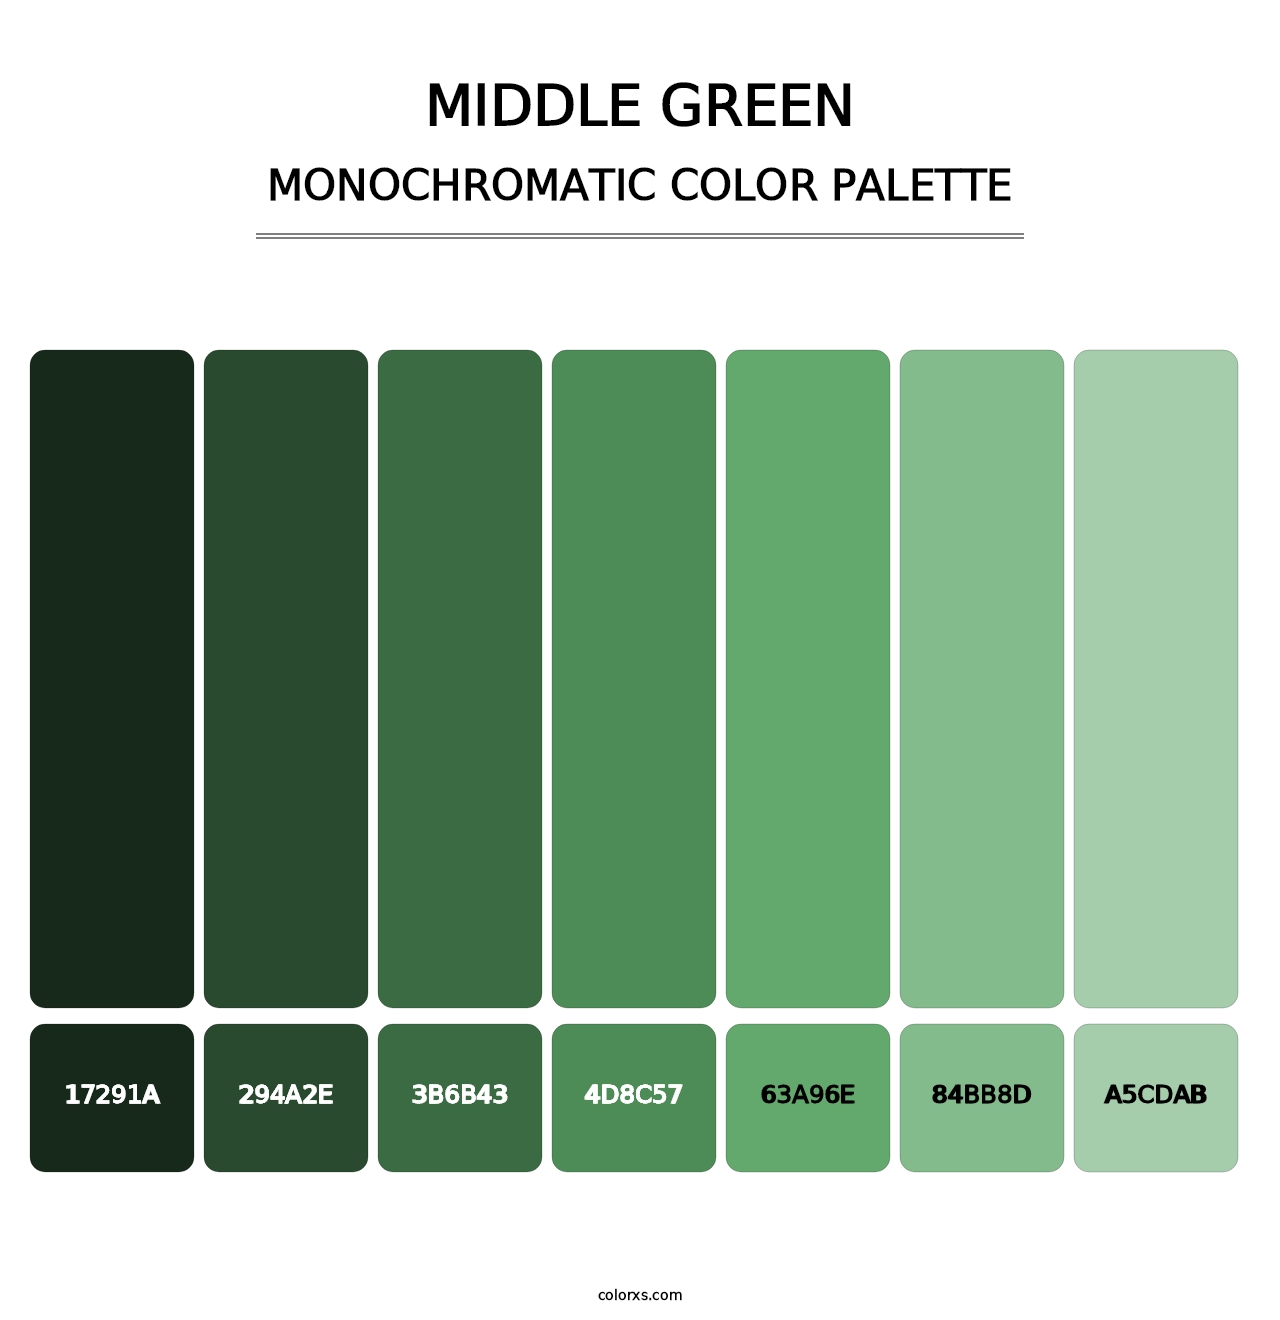 Middle Green - Monochromatic Color Palette